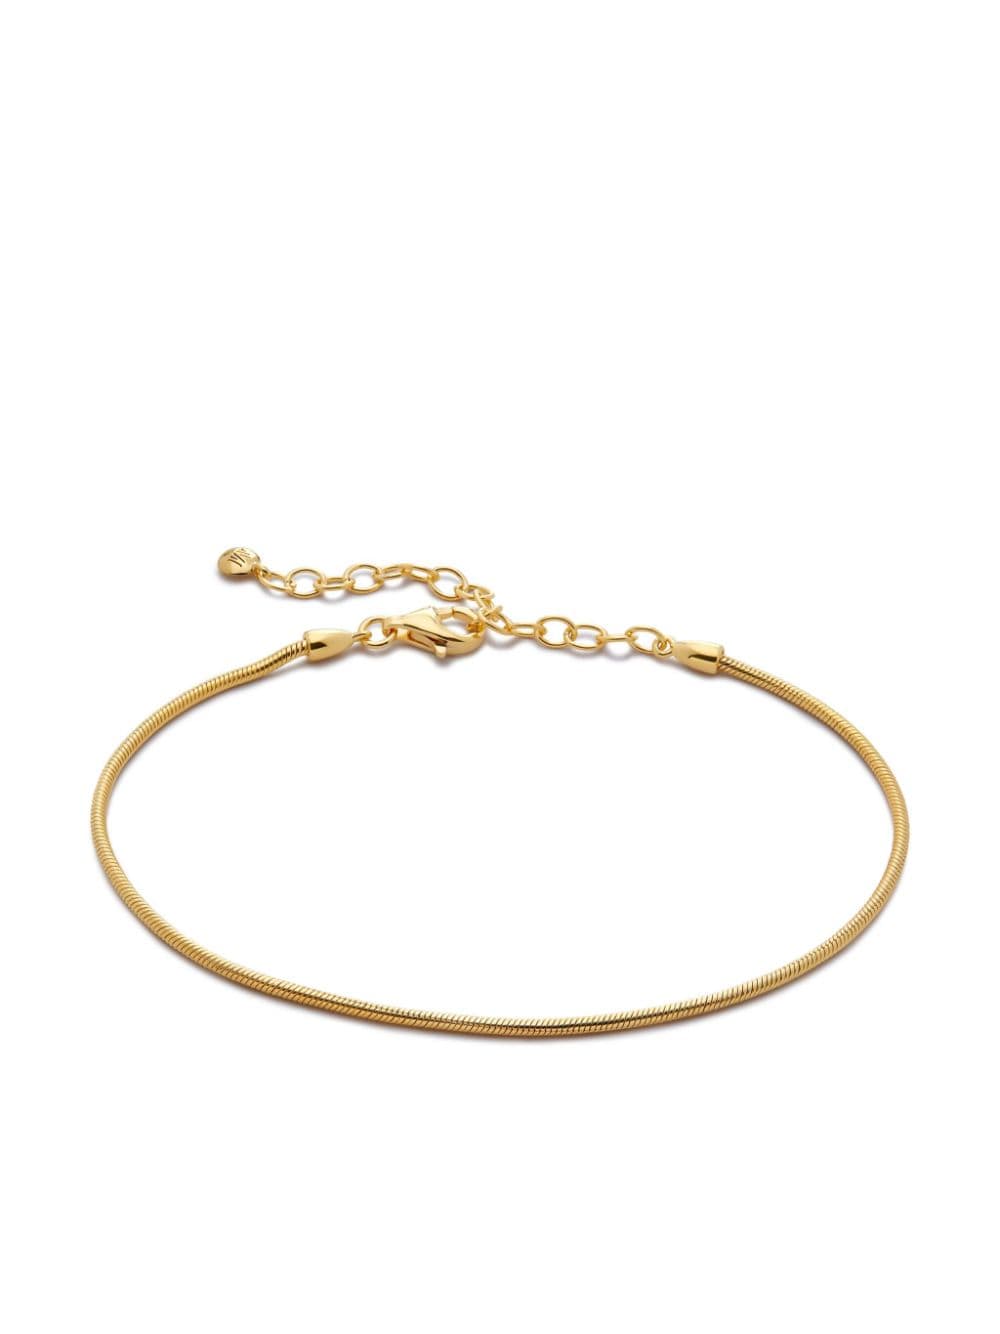 Monica Vinader snake-chain bracelet - Gold von Monica Vinader